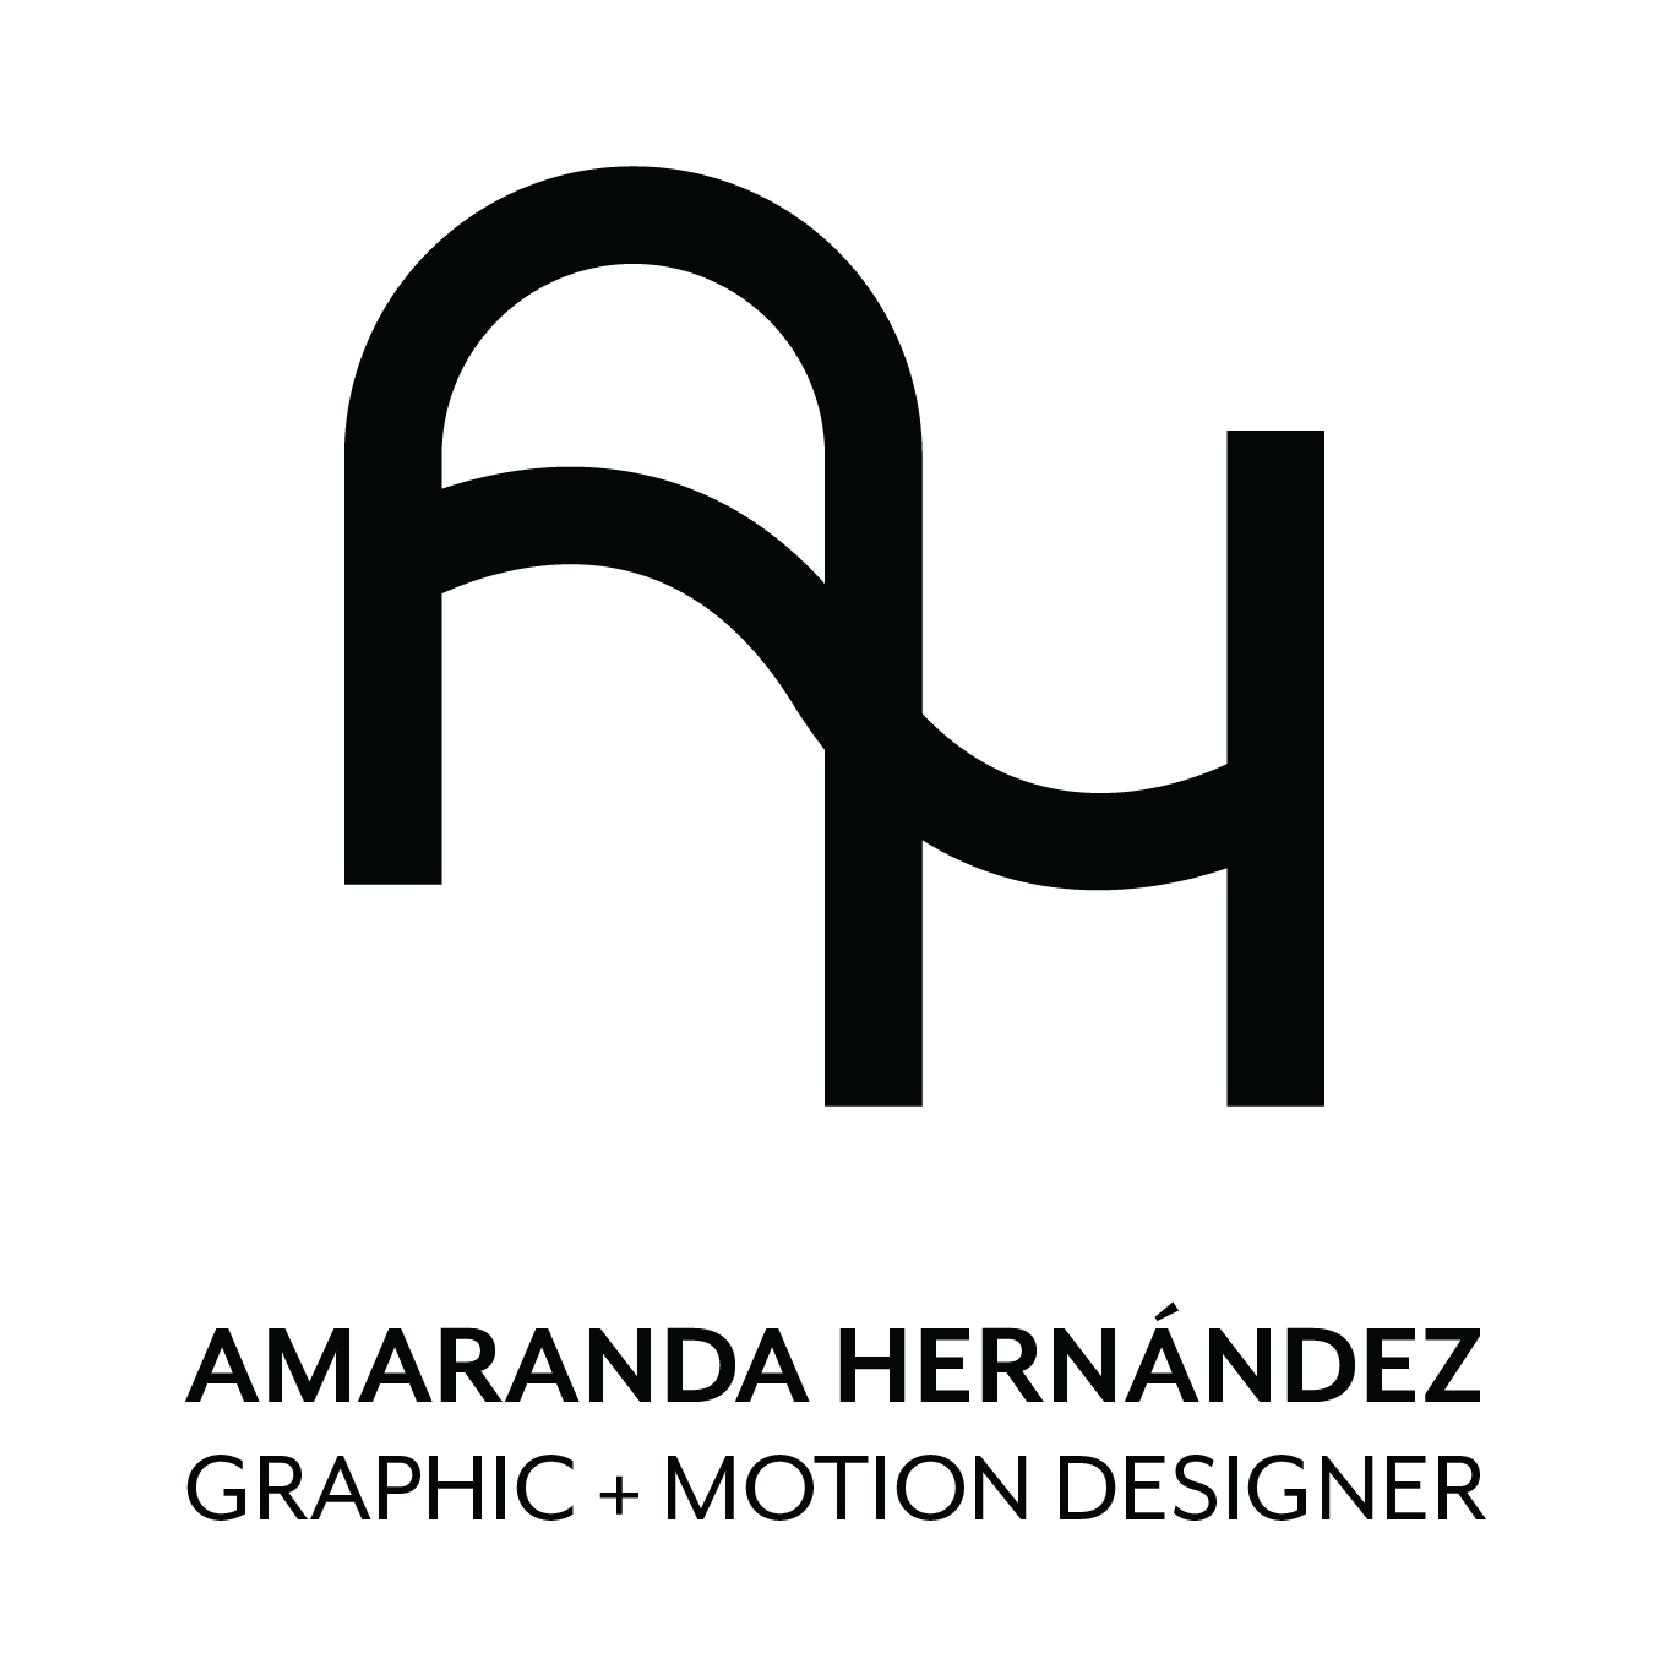 Amaranda Hernandez